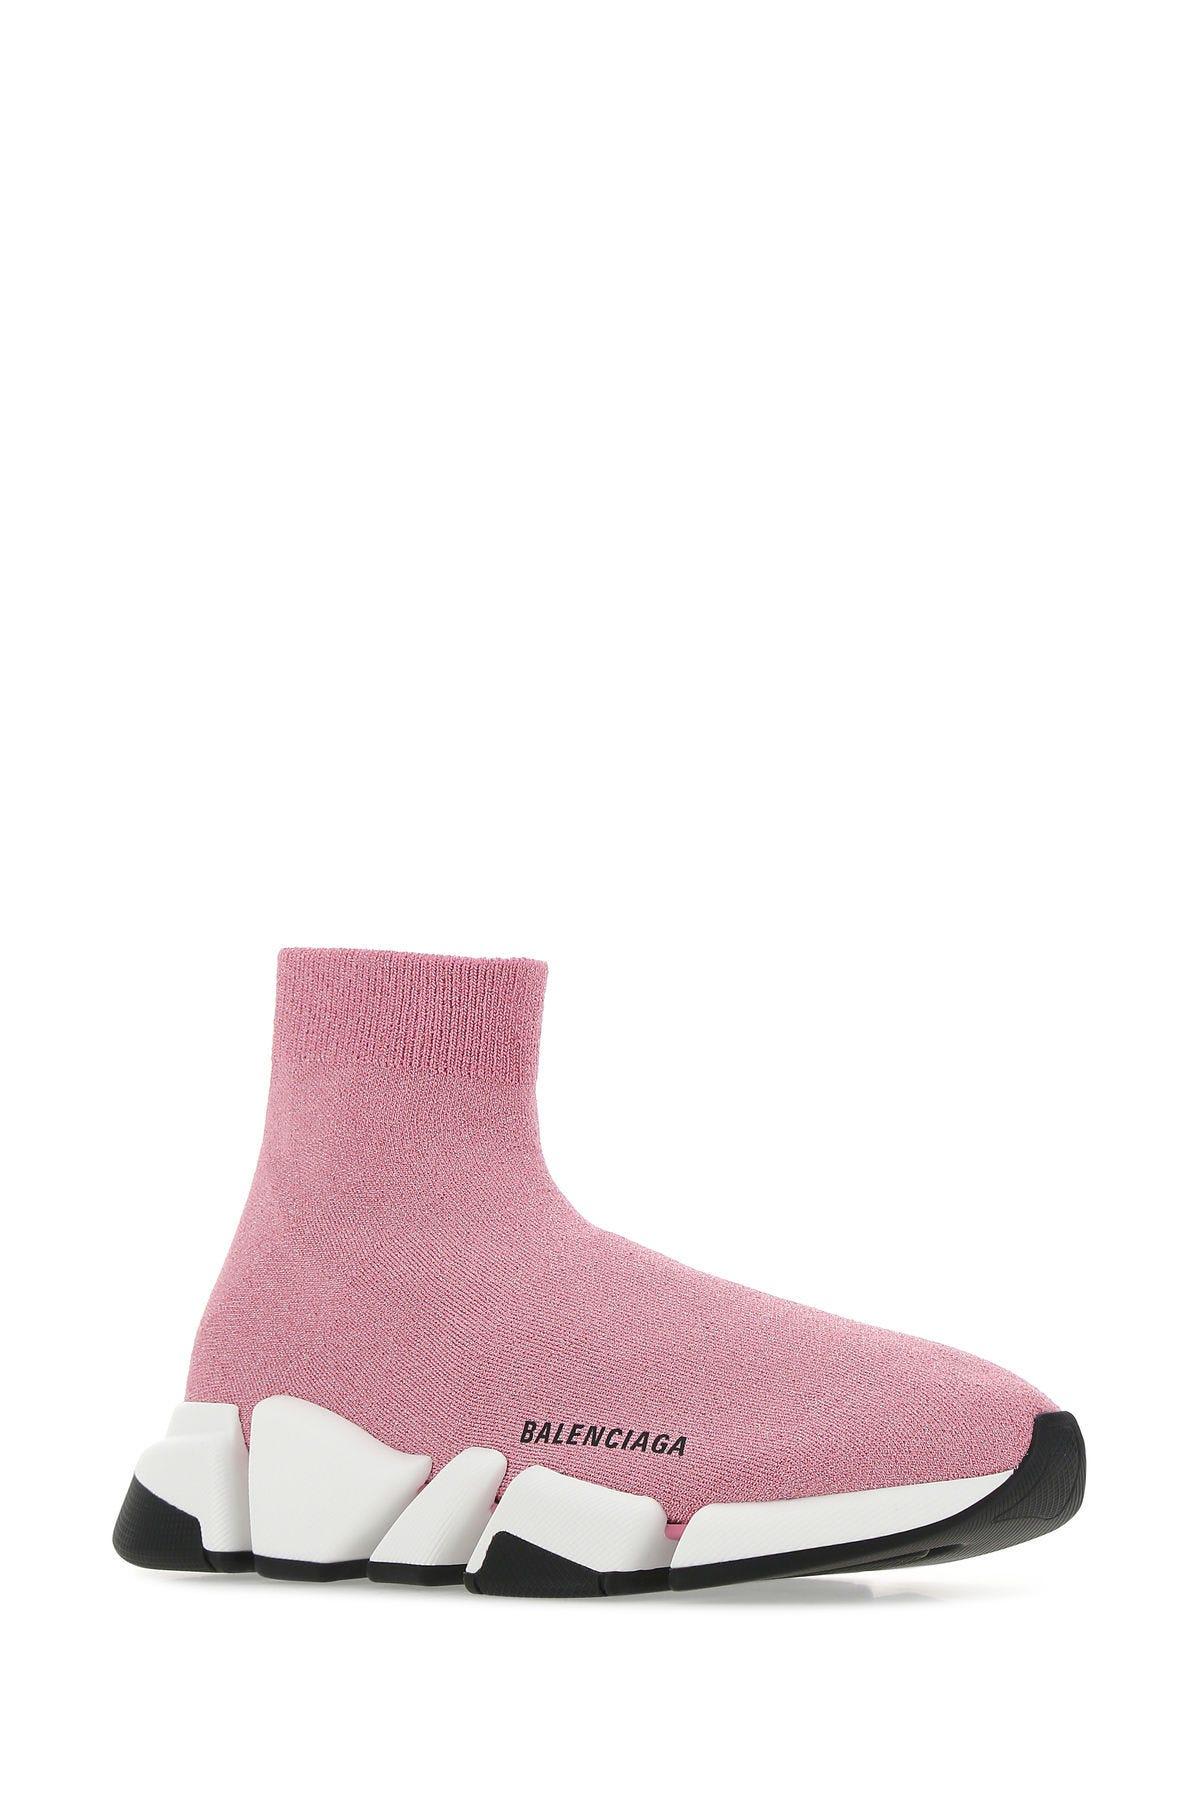 BALENCIAGA SPEED 20 Knit Sock Faux Fur Sneakers Pale Pink US 8  Eur 38   eBay